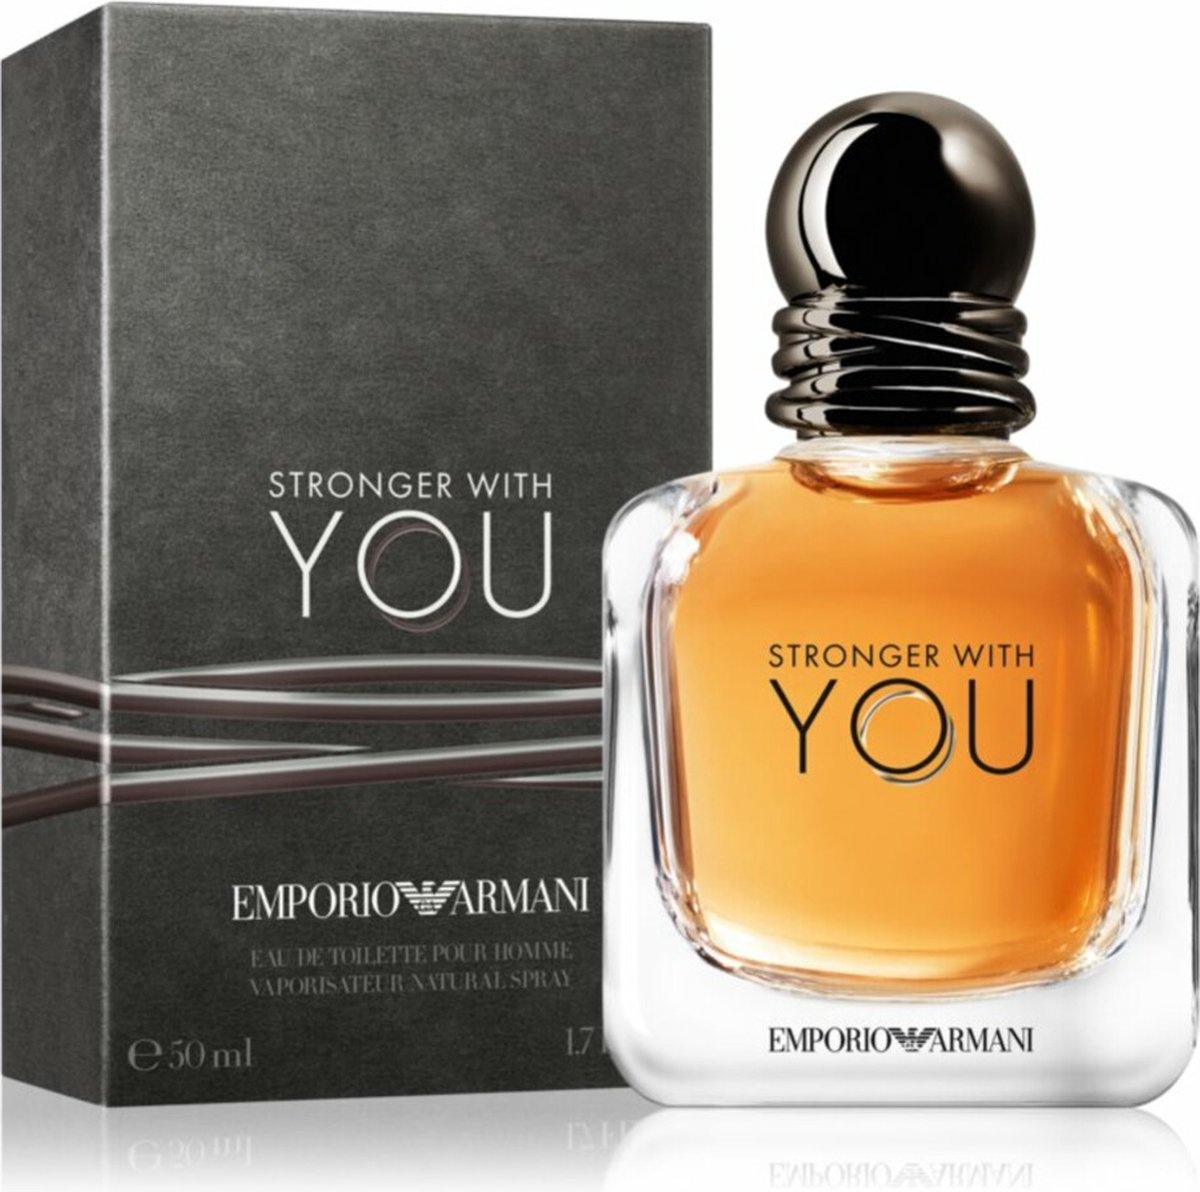 Emporio Armani Stronger With You 50 ml - Eau de Toilette - Men's perfume - Packaging damaged